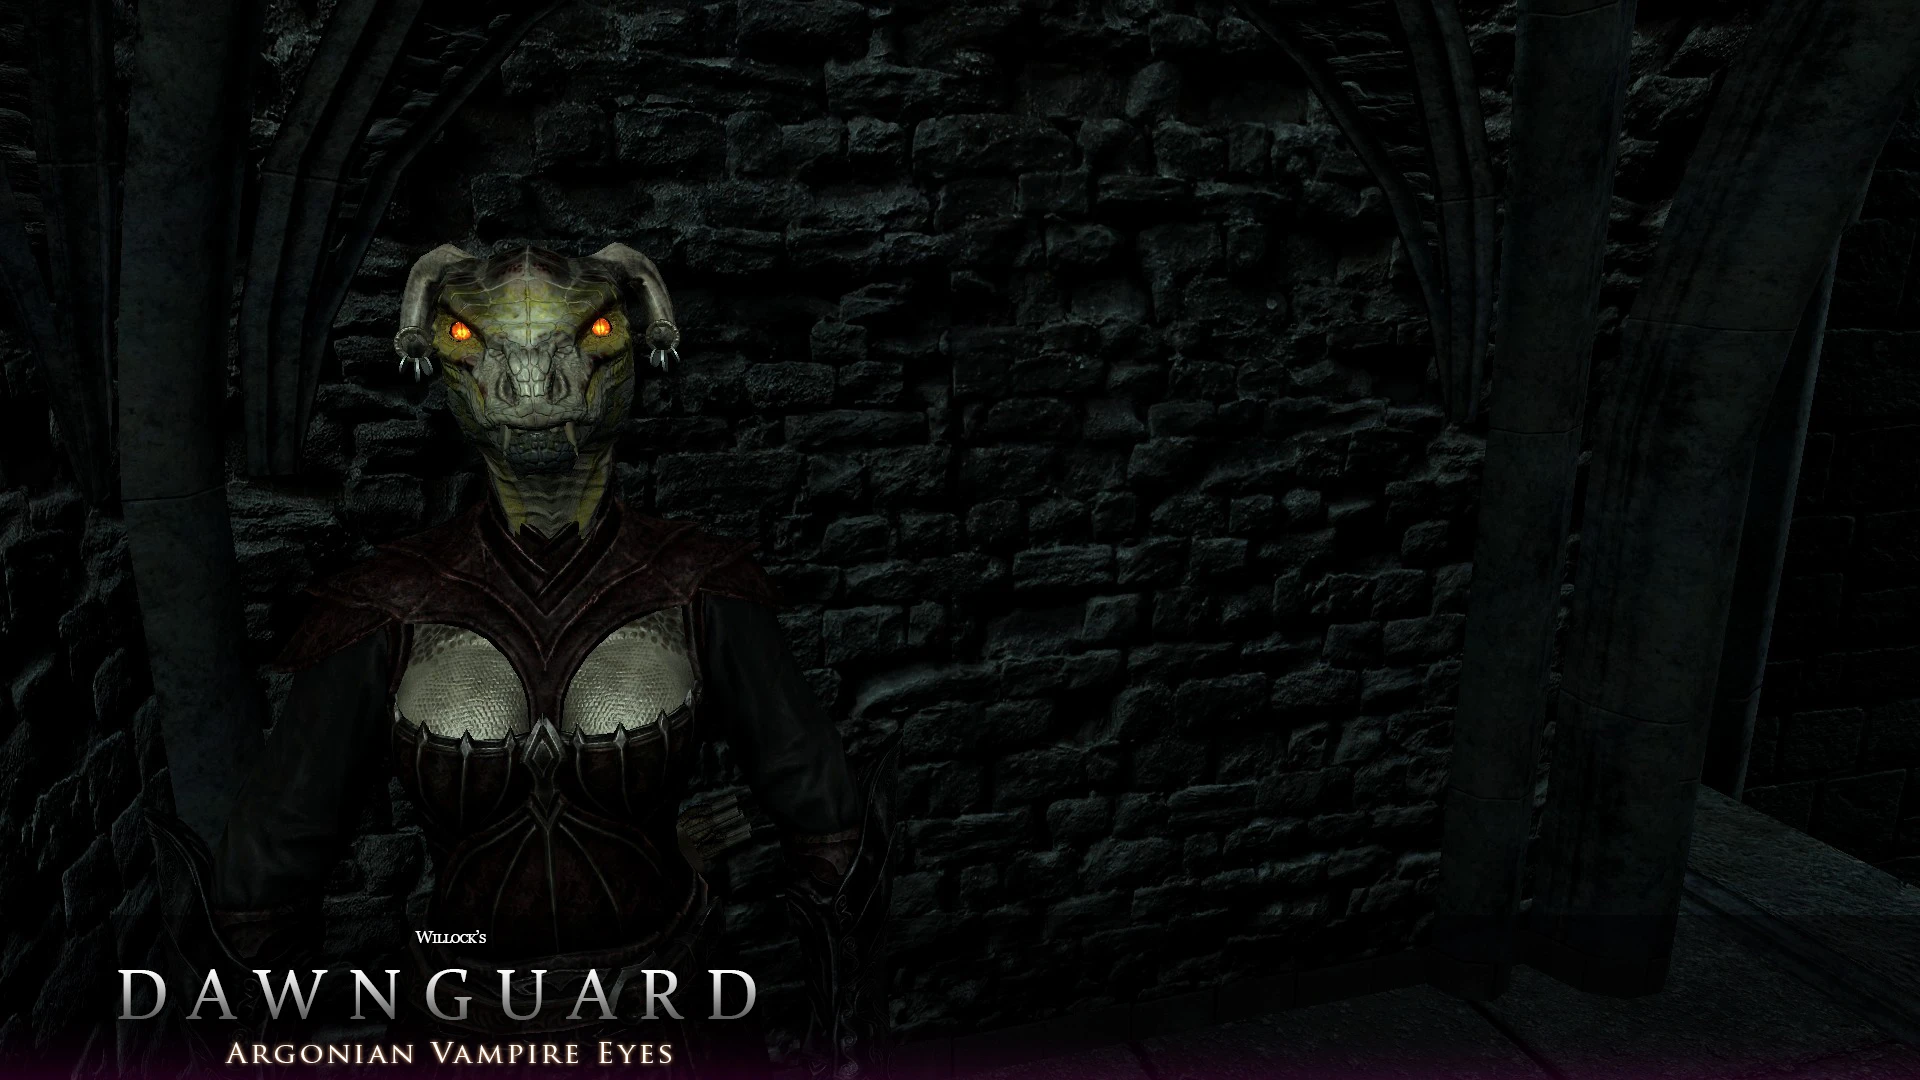 Argonian Vampire Eyes Dawnguard at Skyrim Nexus Mods and Community. 